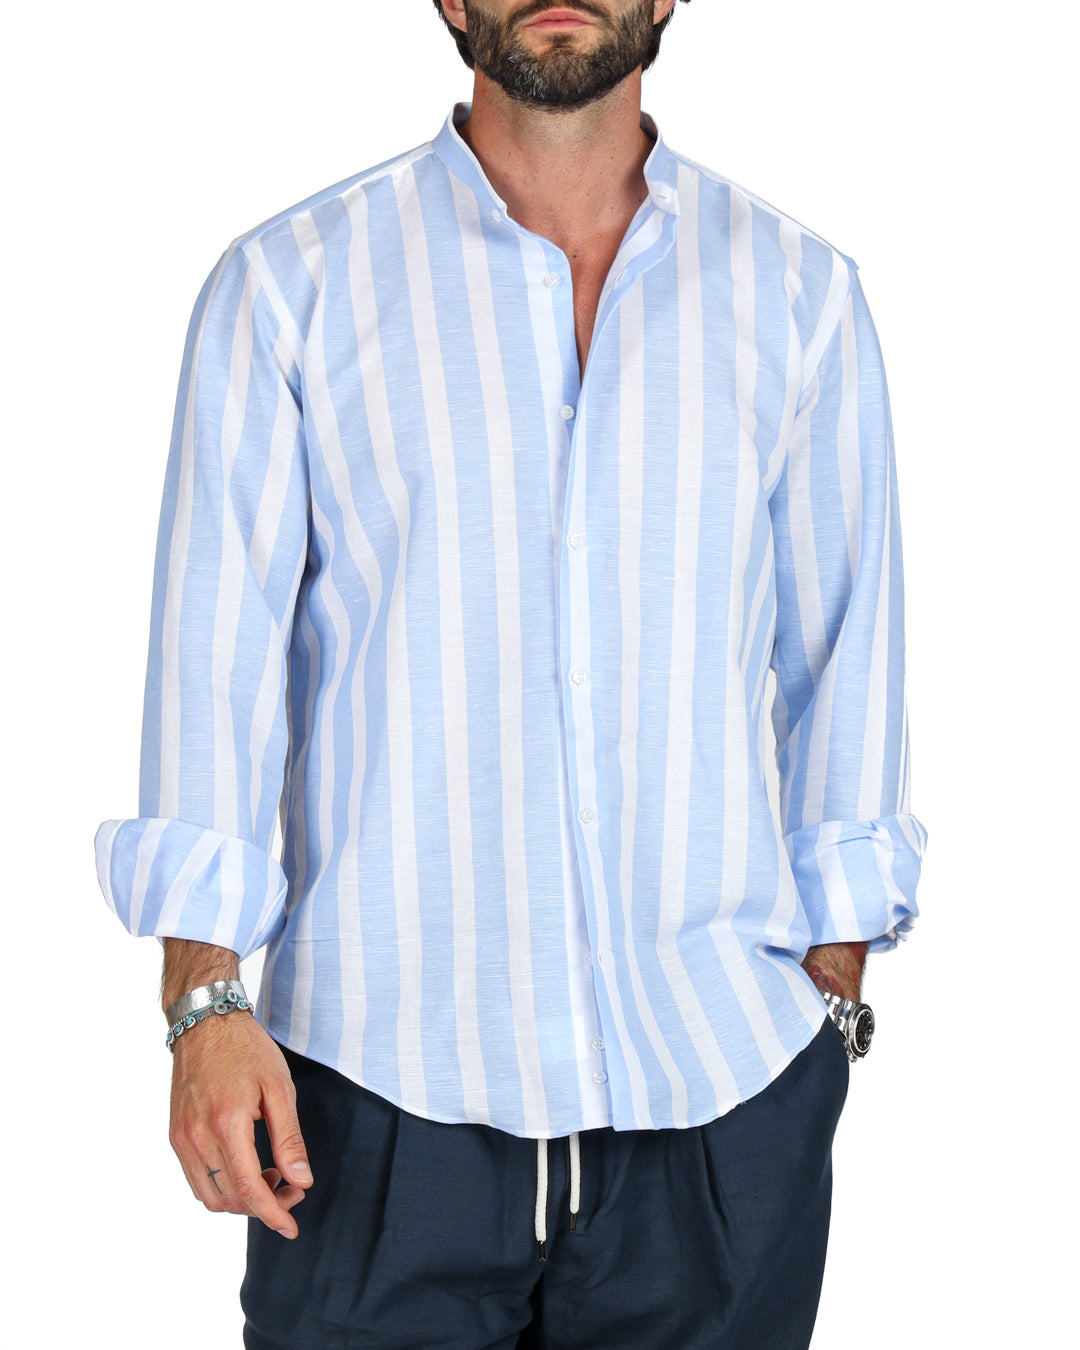 Amalfi - Korean shirt with maxi stripes in light blue